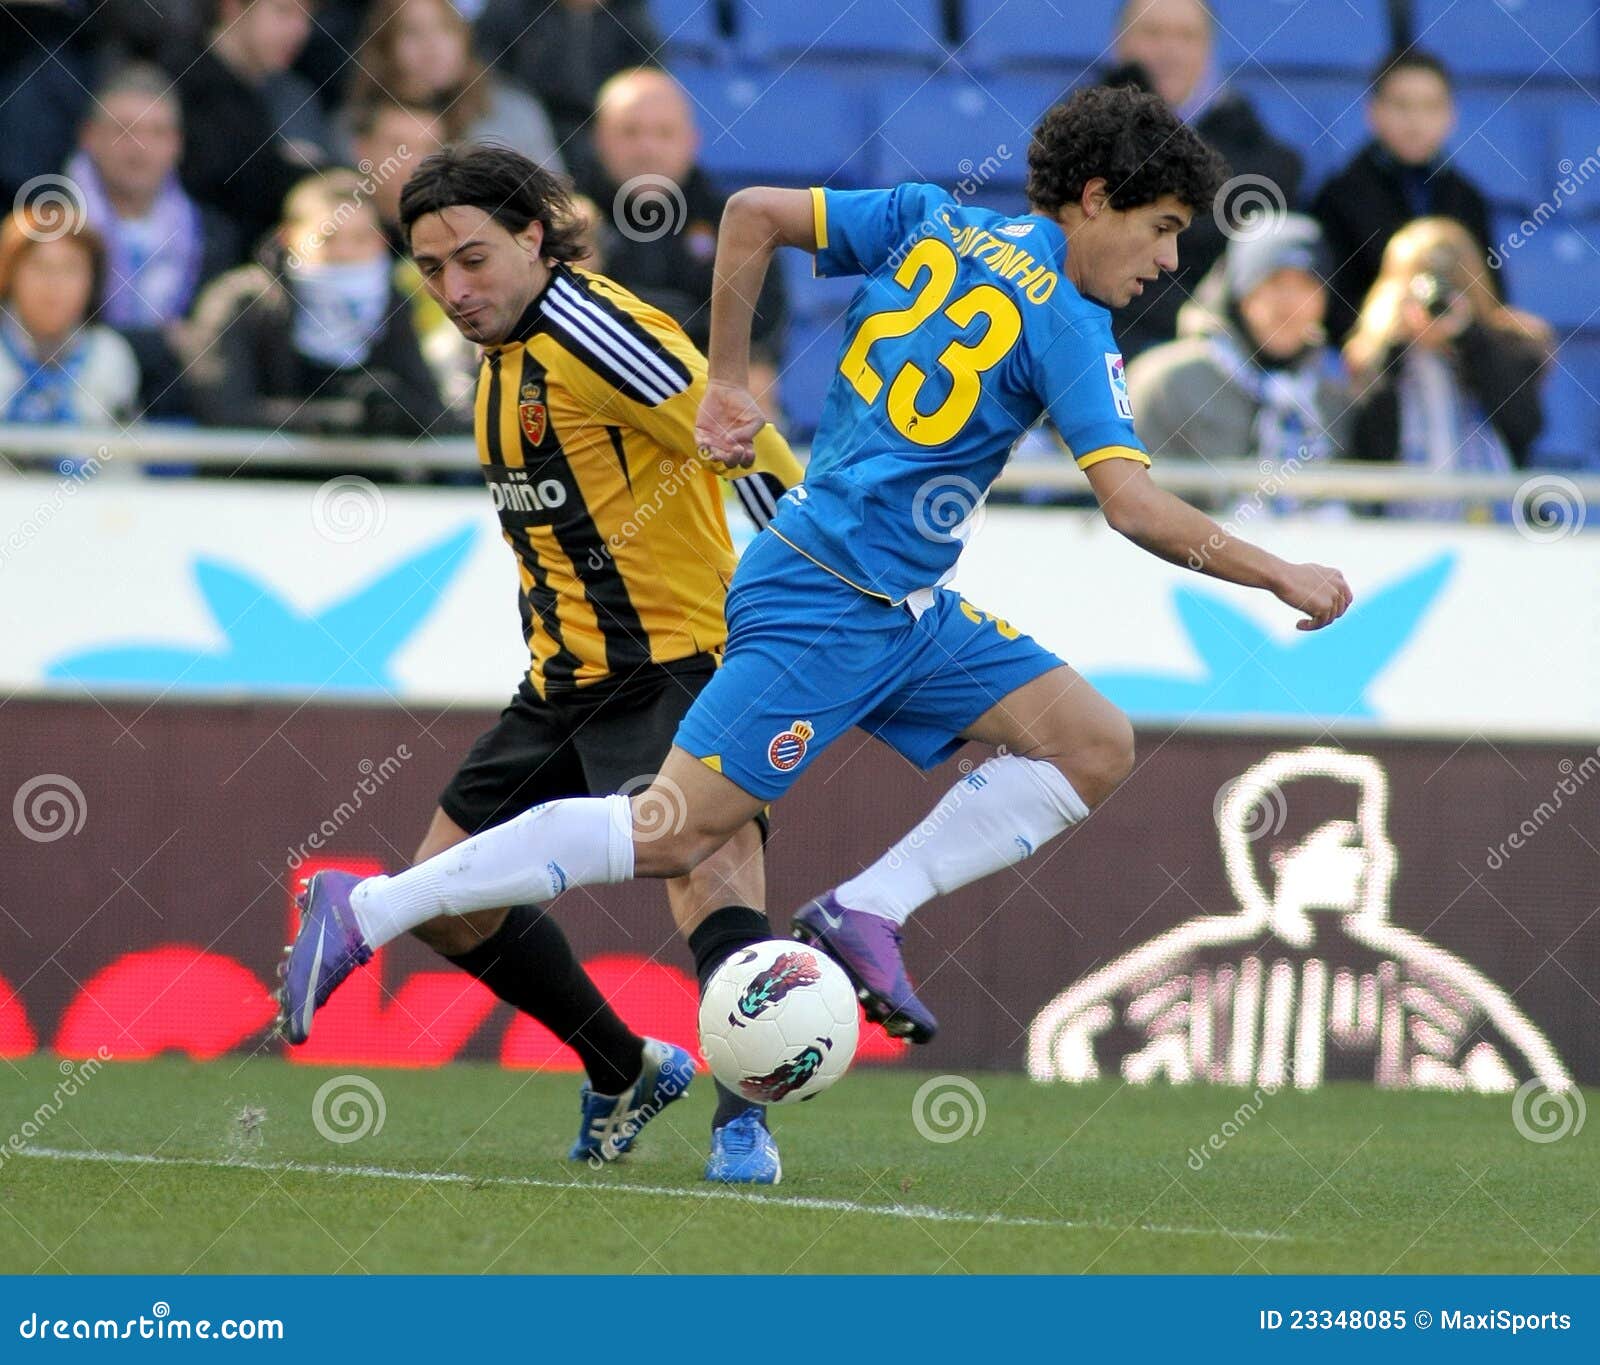 Coutinho of Espanyol Vies with Alvarez of Zaragoza Editorial Image - Image brazil, defender: